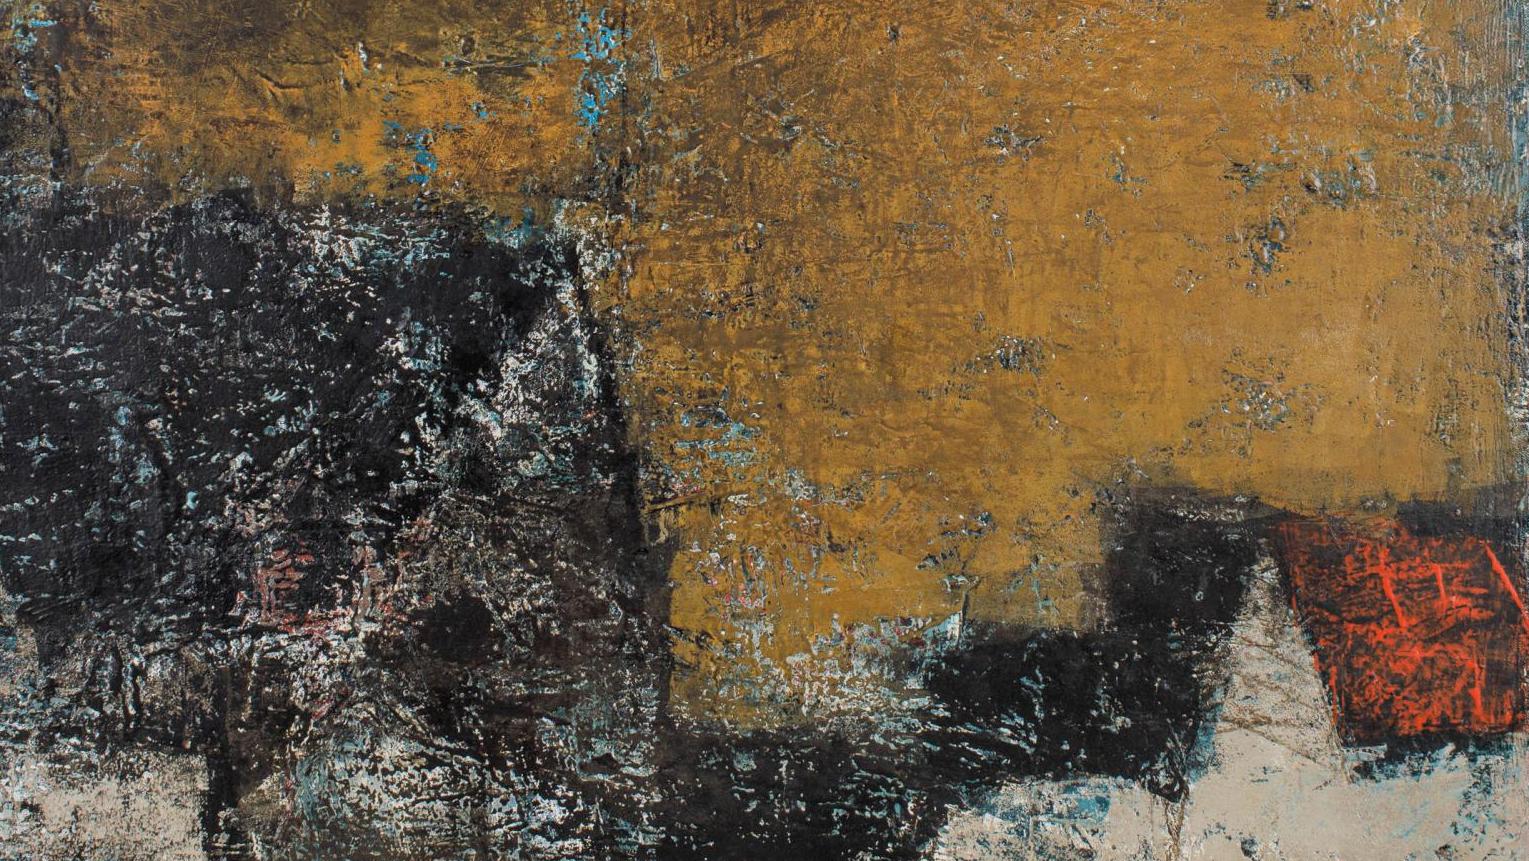 Akbar Padamsee (1928-2020), Composition, 1963, huile sur toile, 80 x 80 cm. Estimation :... Images abstraites d’Akbar Padamsee